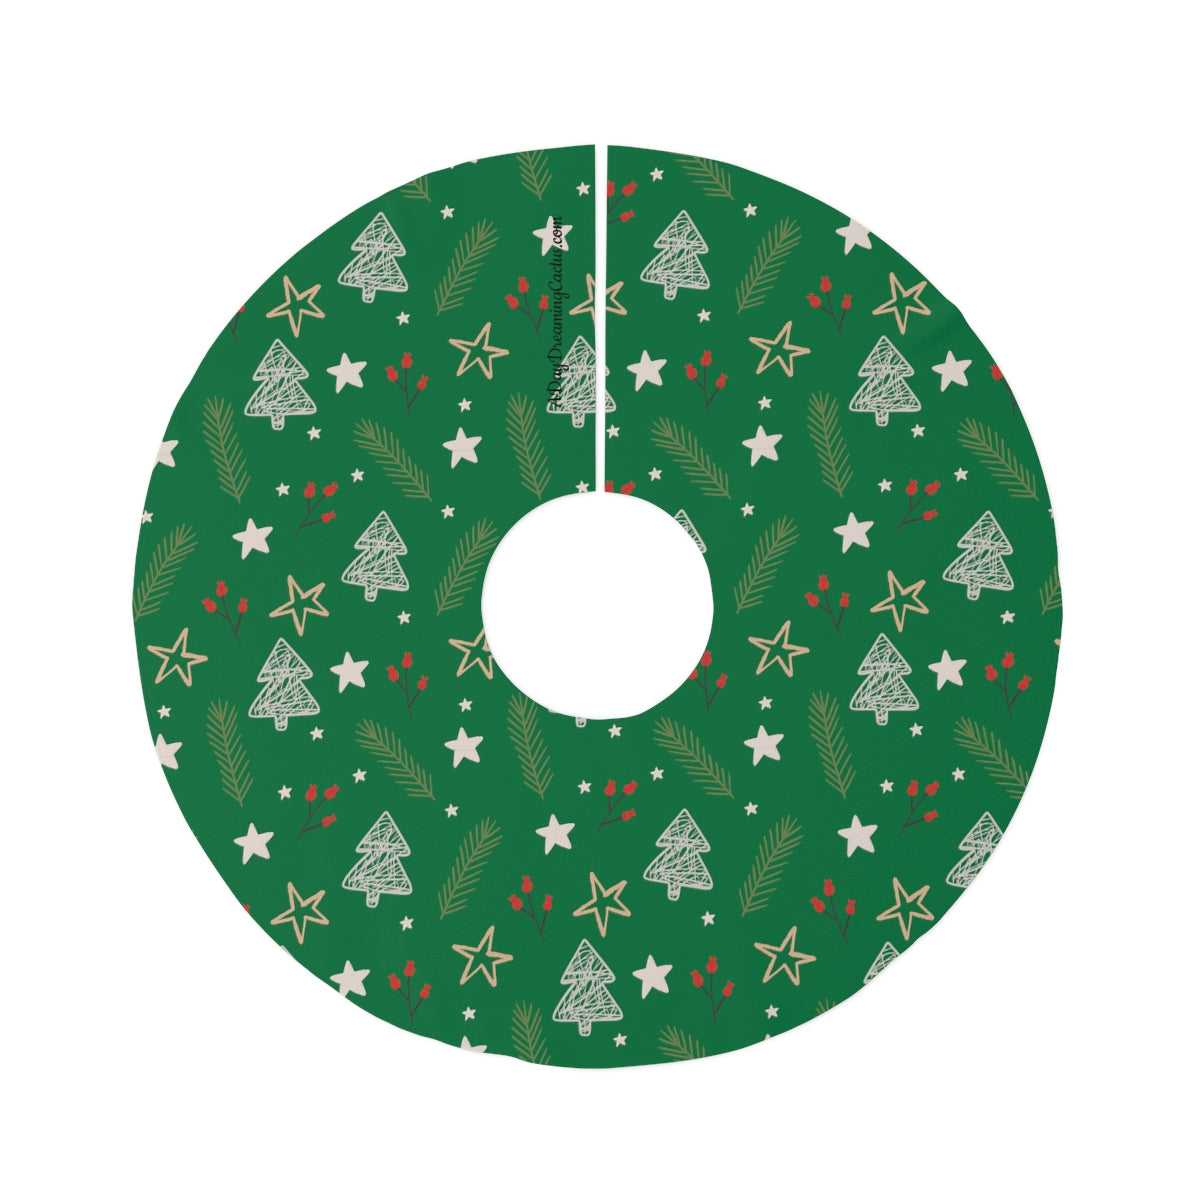 Green Stars Trees and Pine Needles ~ Christmas Holiday Round Tree Skirt